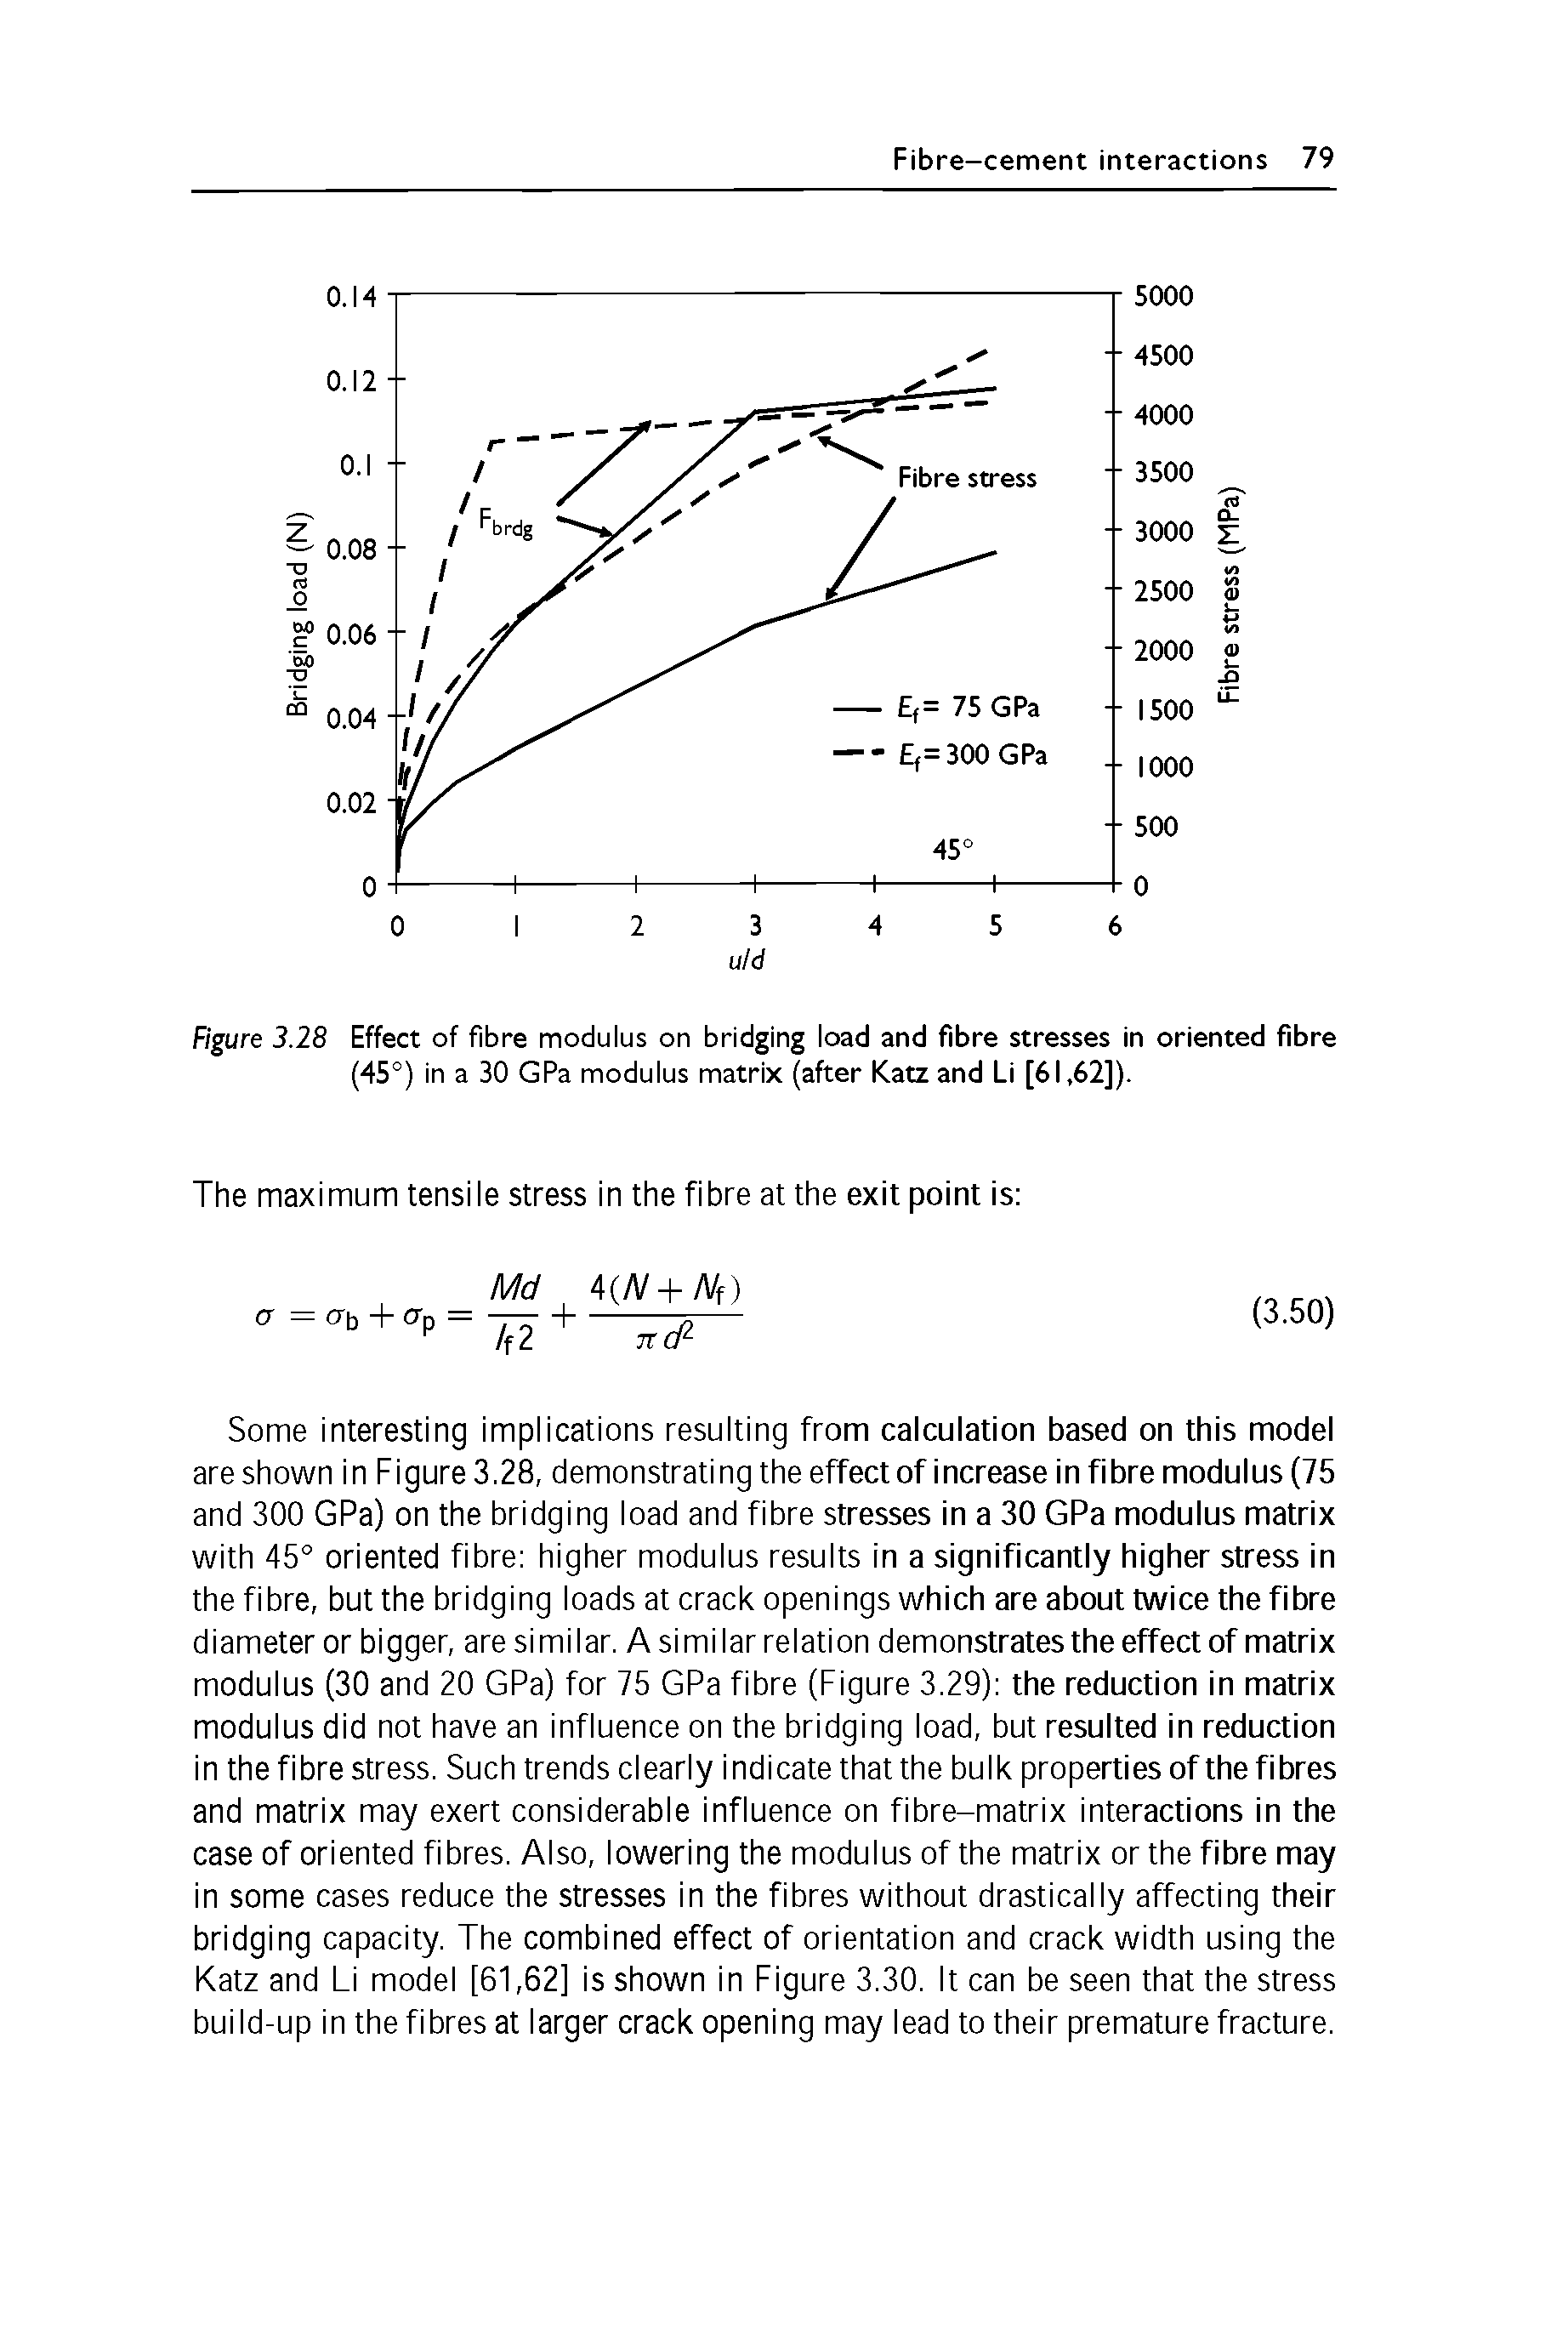 Figure 3.28 Effect of fibre modulus on bridging load and fibre stresses in oriented fibre (45°) in a 30 GPa modulus matrix (after Katz and Li [61,62]).